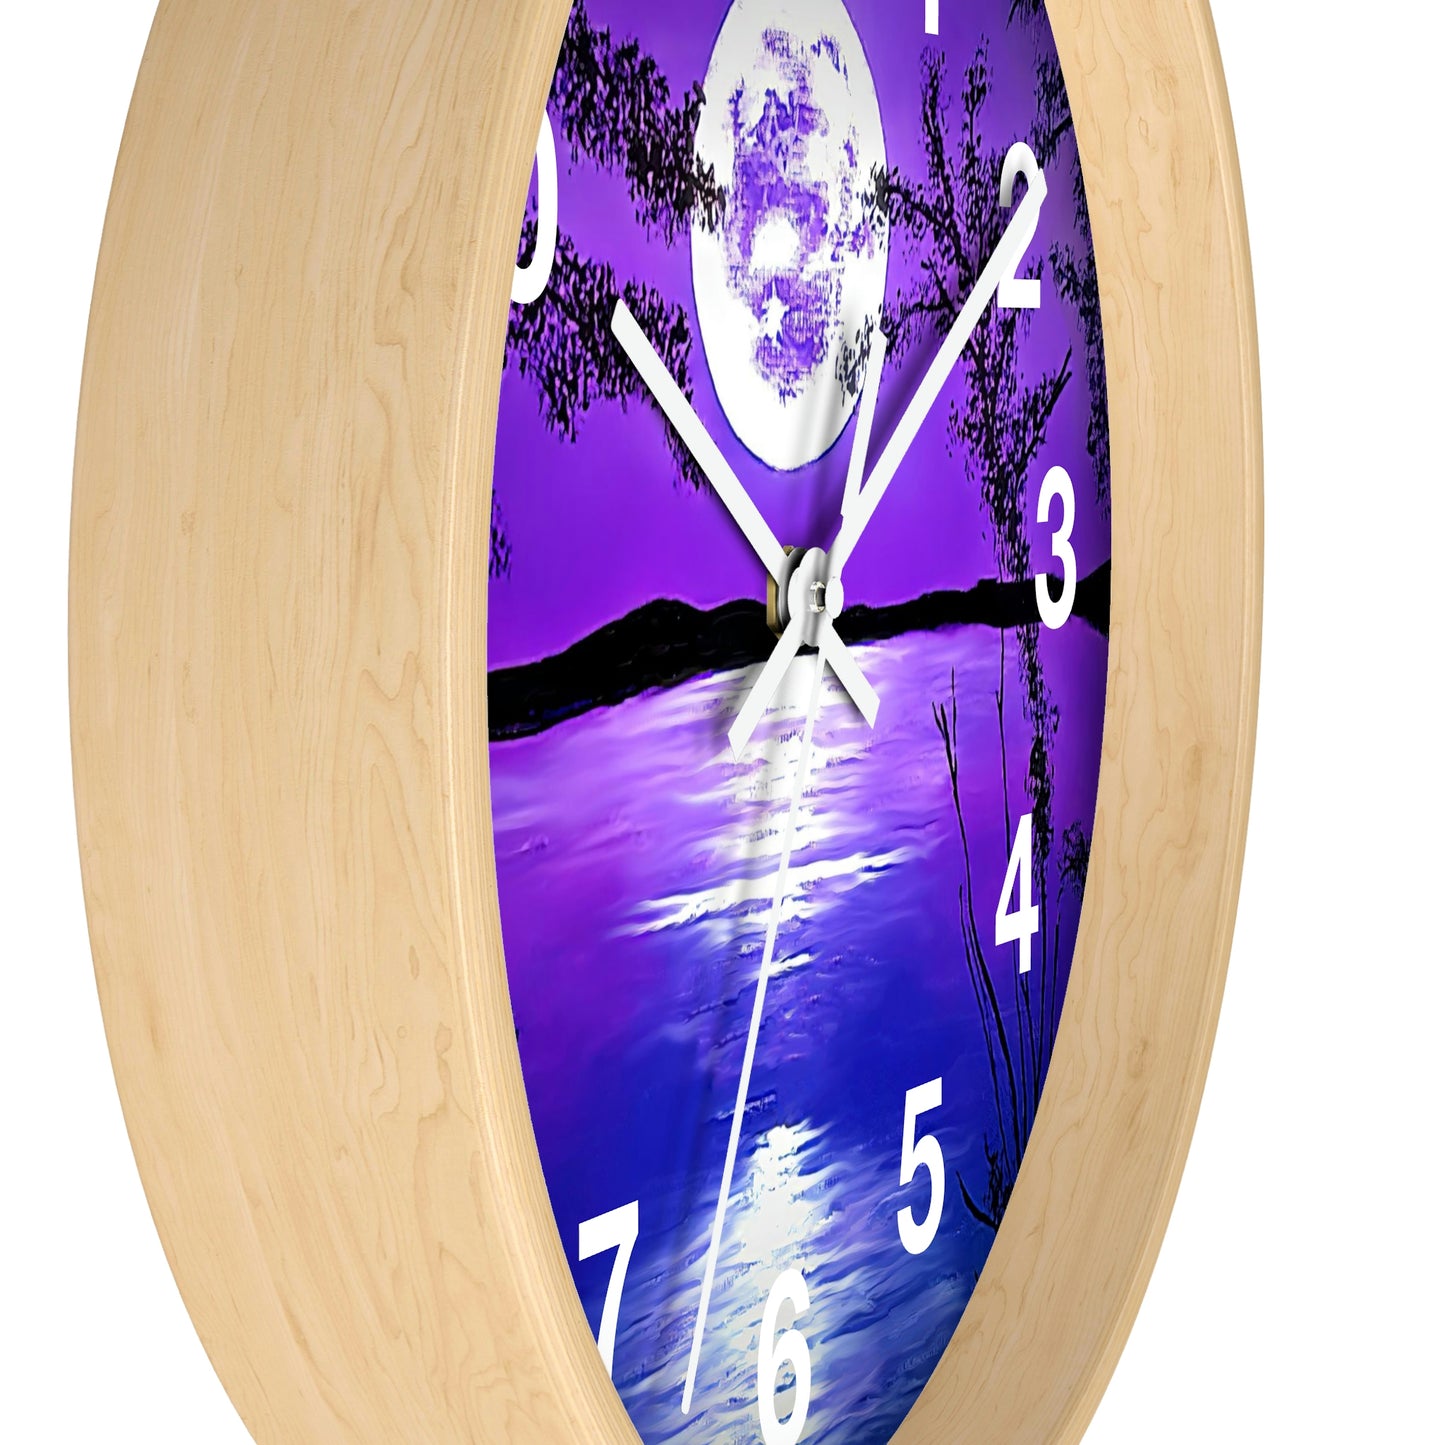 Wall Clock | "Purple Moonlight" | Custom Art Print